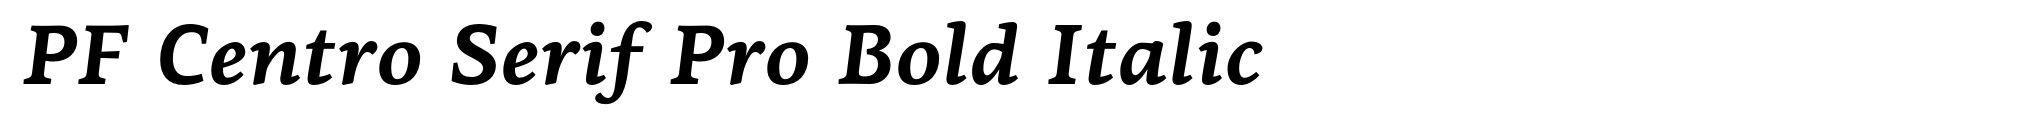 PF Centro Serif Pro Bold Italic image